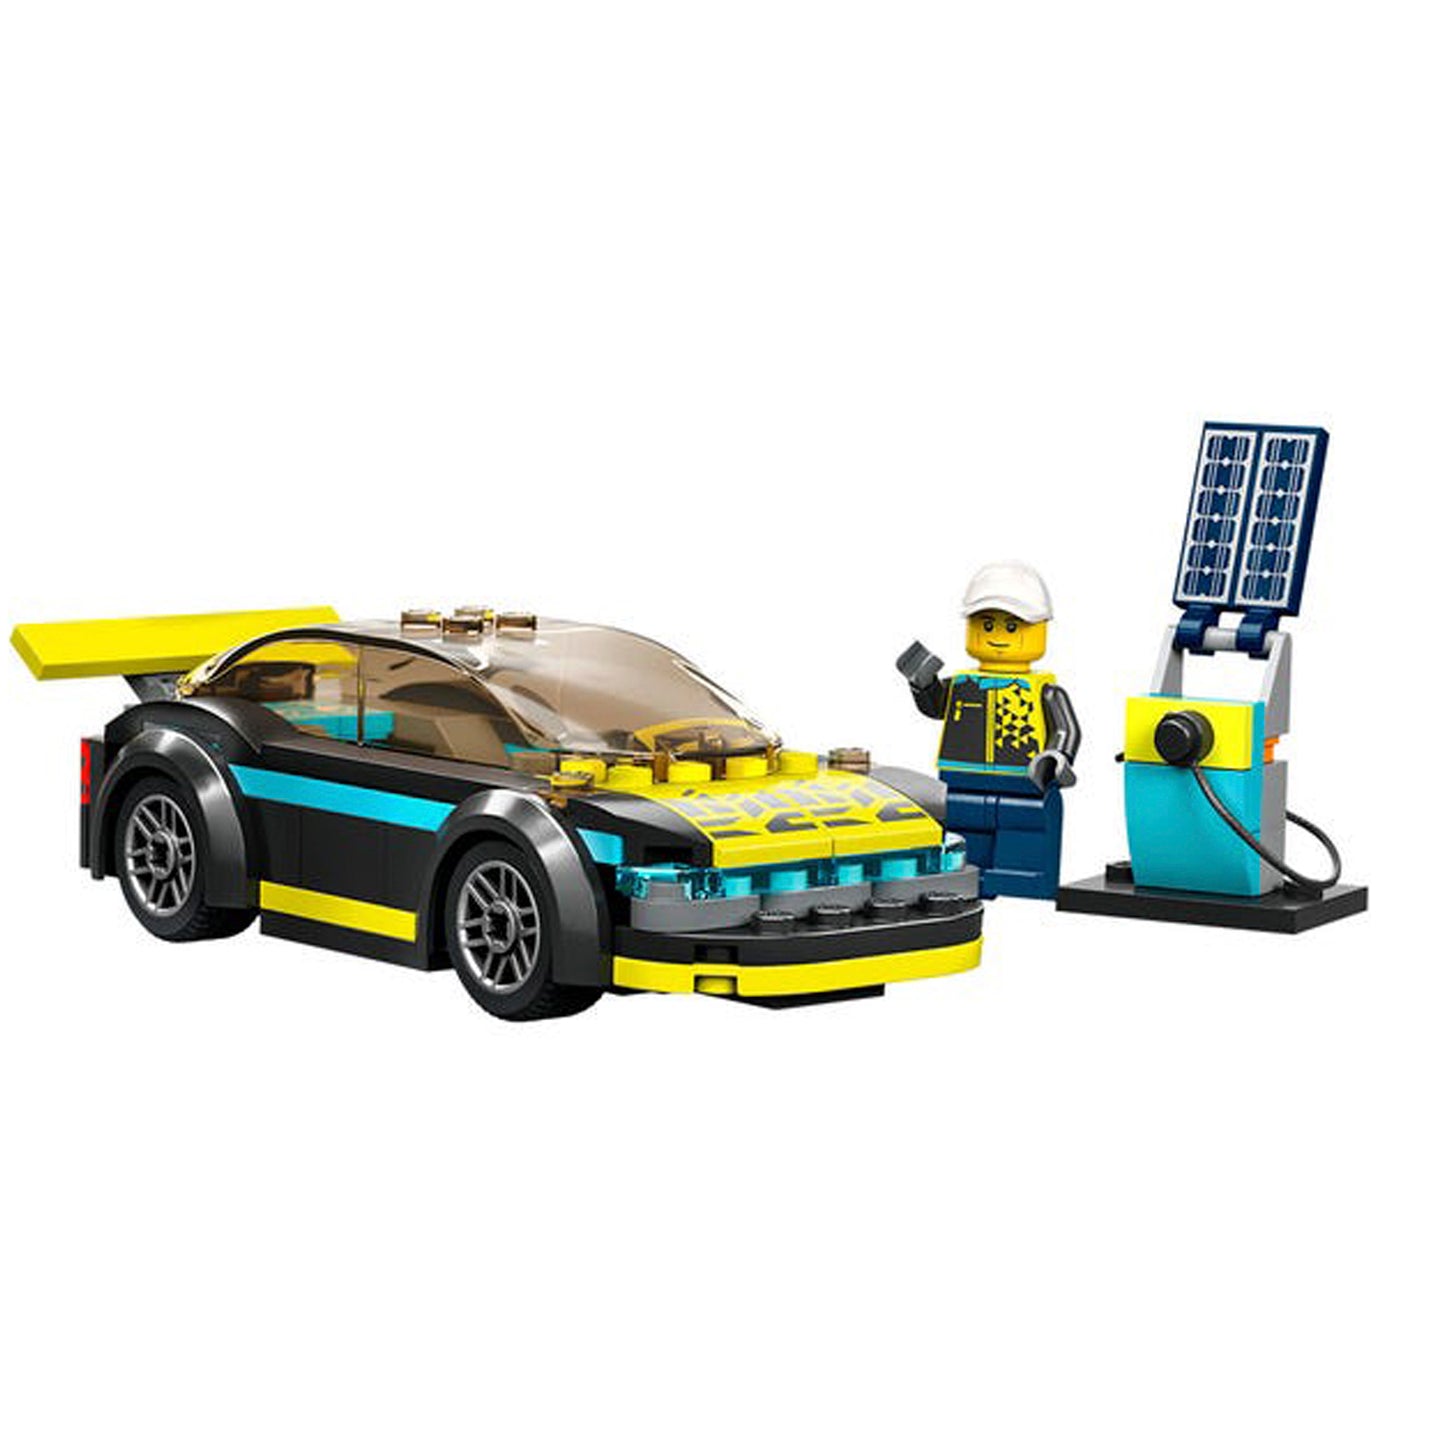 Lego City Auto Deportivo Eléctrico 60383 - Crazygames